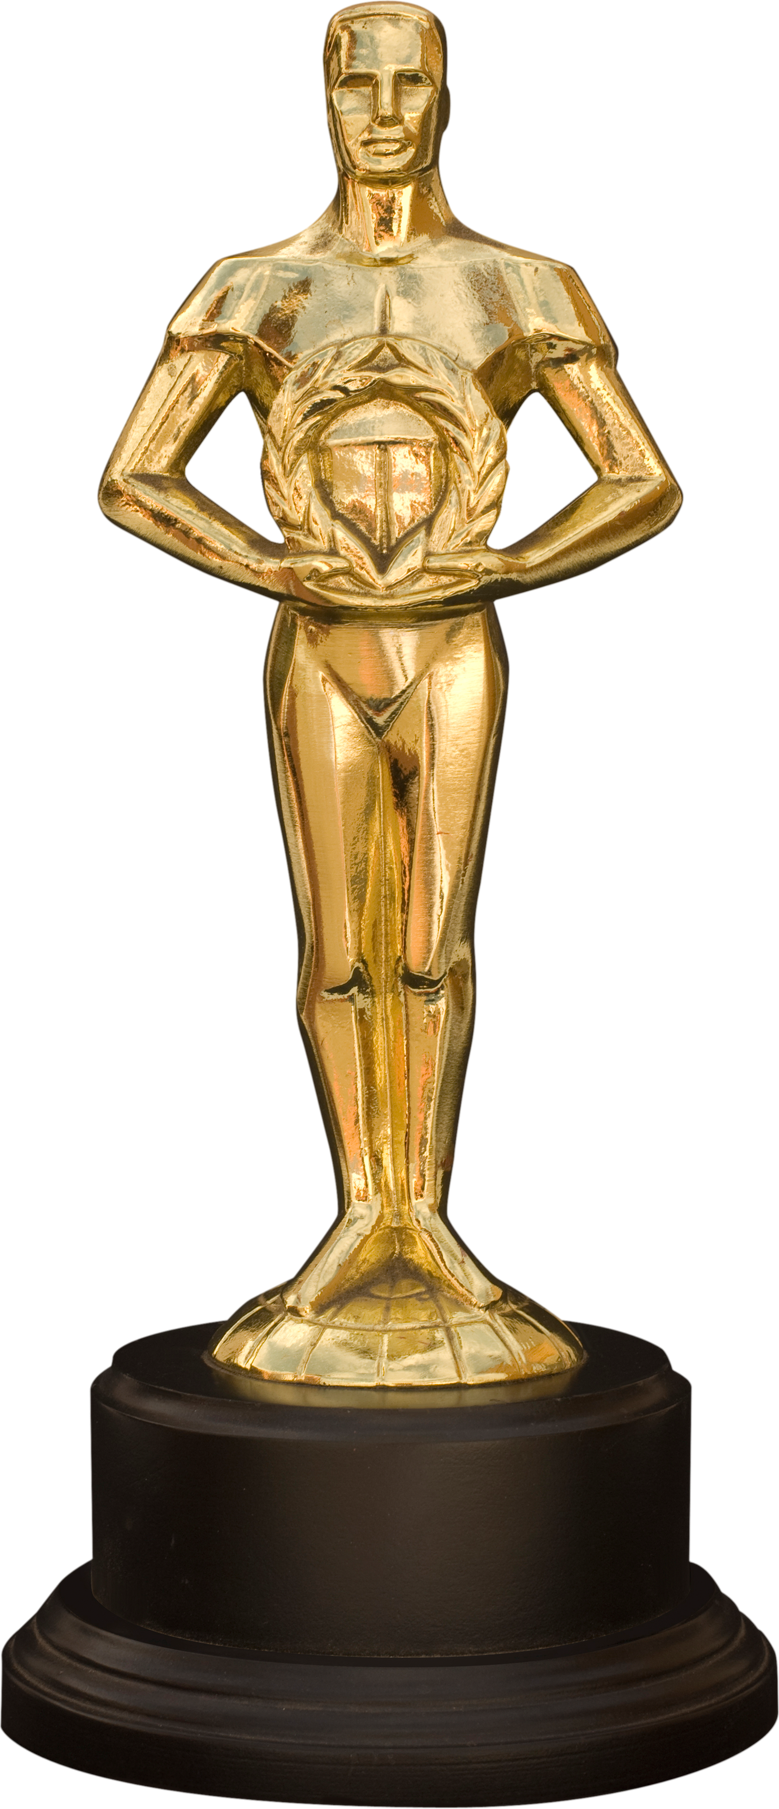 Grammy Awards Trophy PNG Free Image